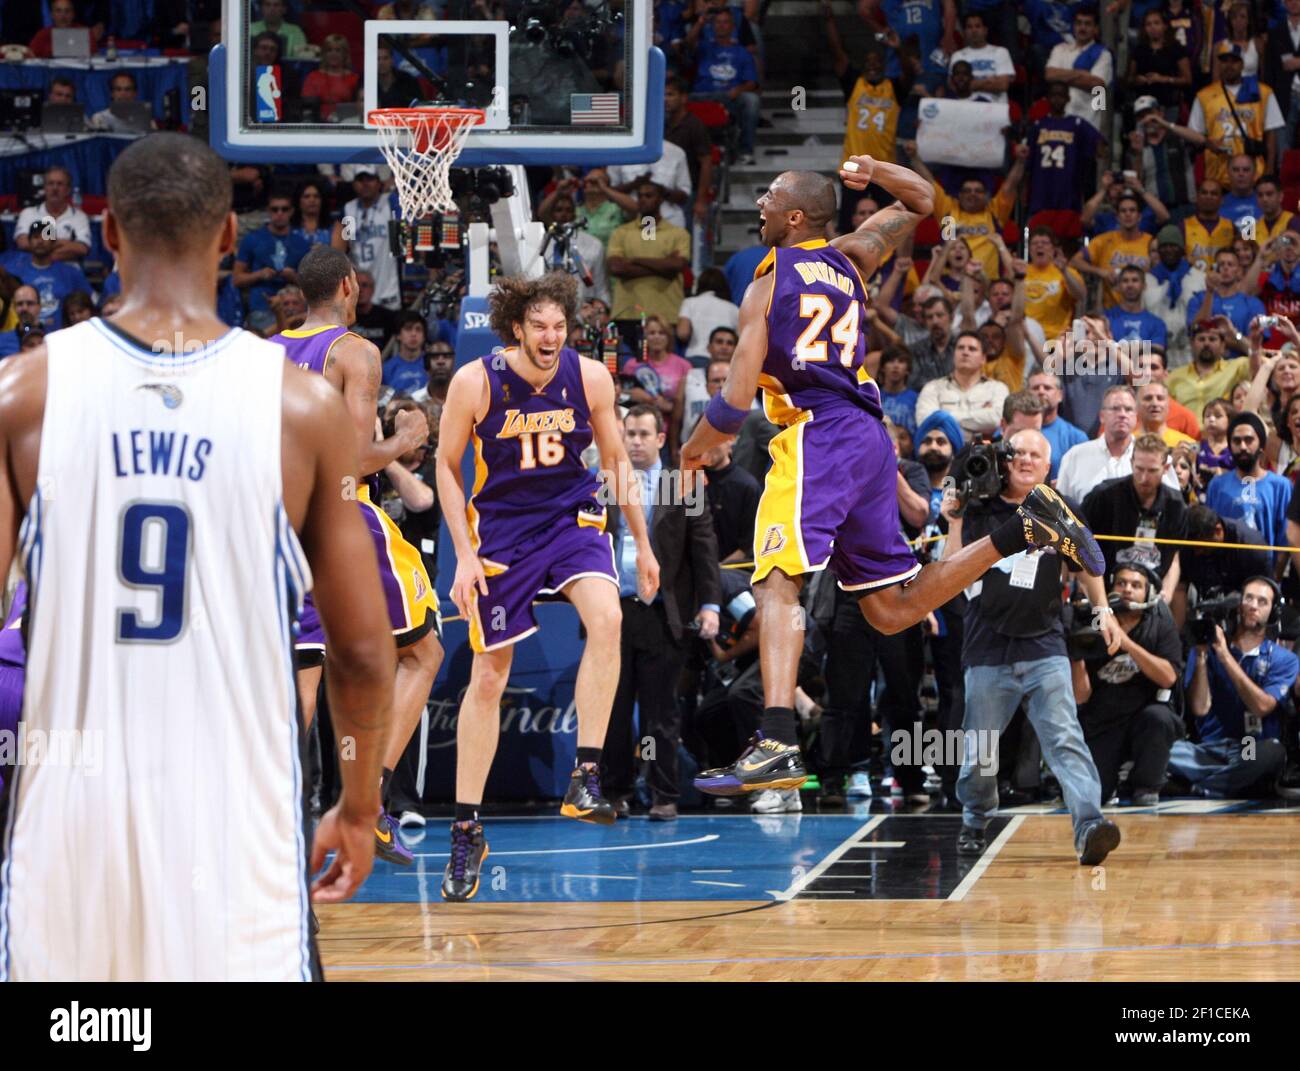 Pau Gasol's Lakers transformation playing with Kobe Bryant - ESPN